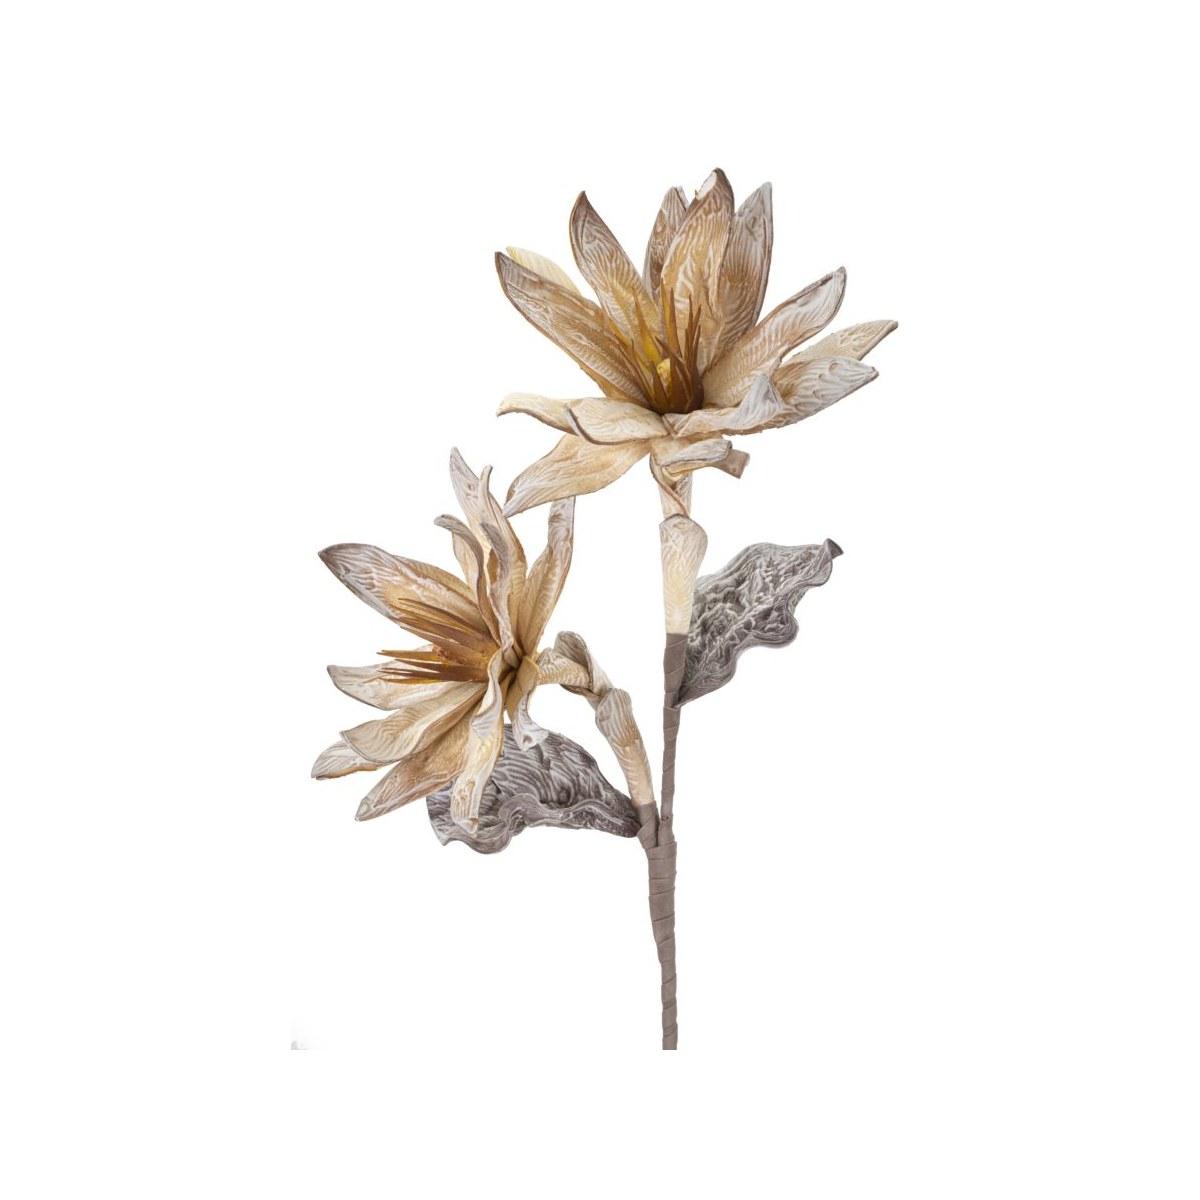 Fiore Glsang Flower x2 Giallo cm.Ø28x88